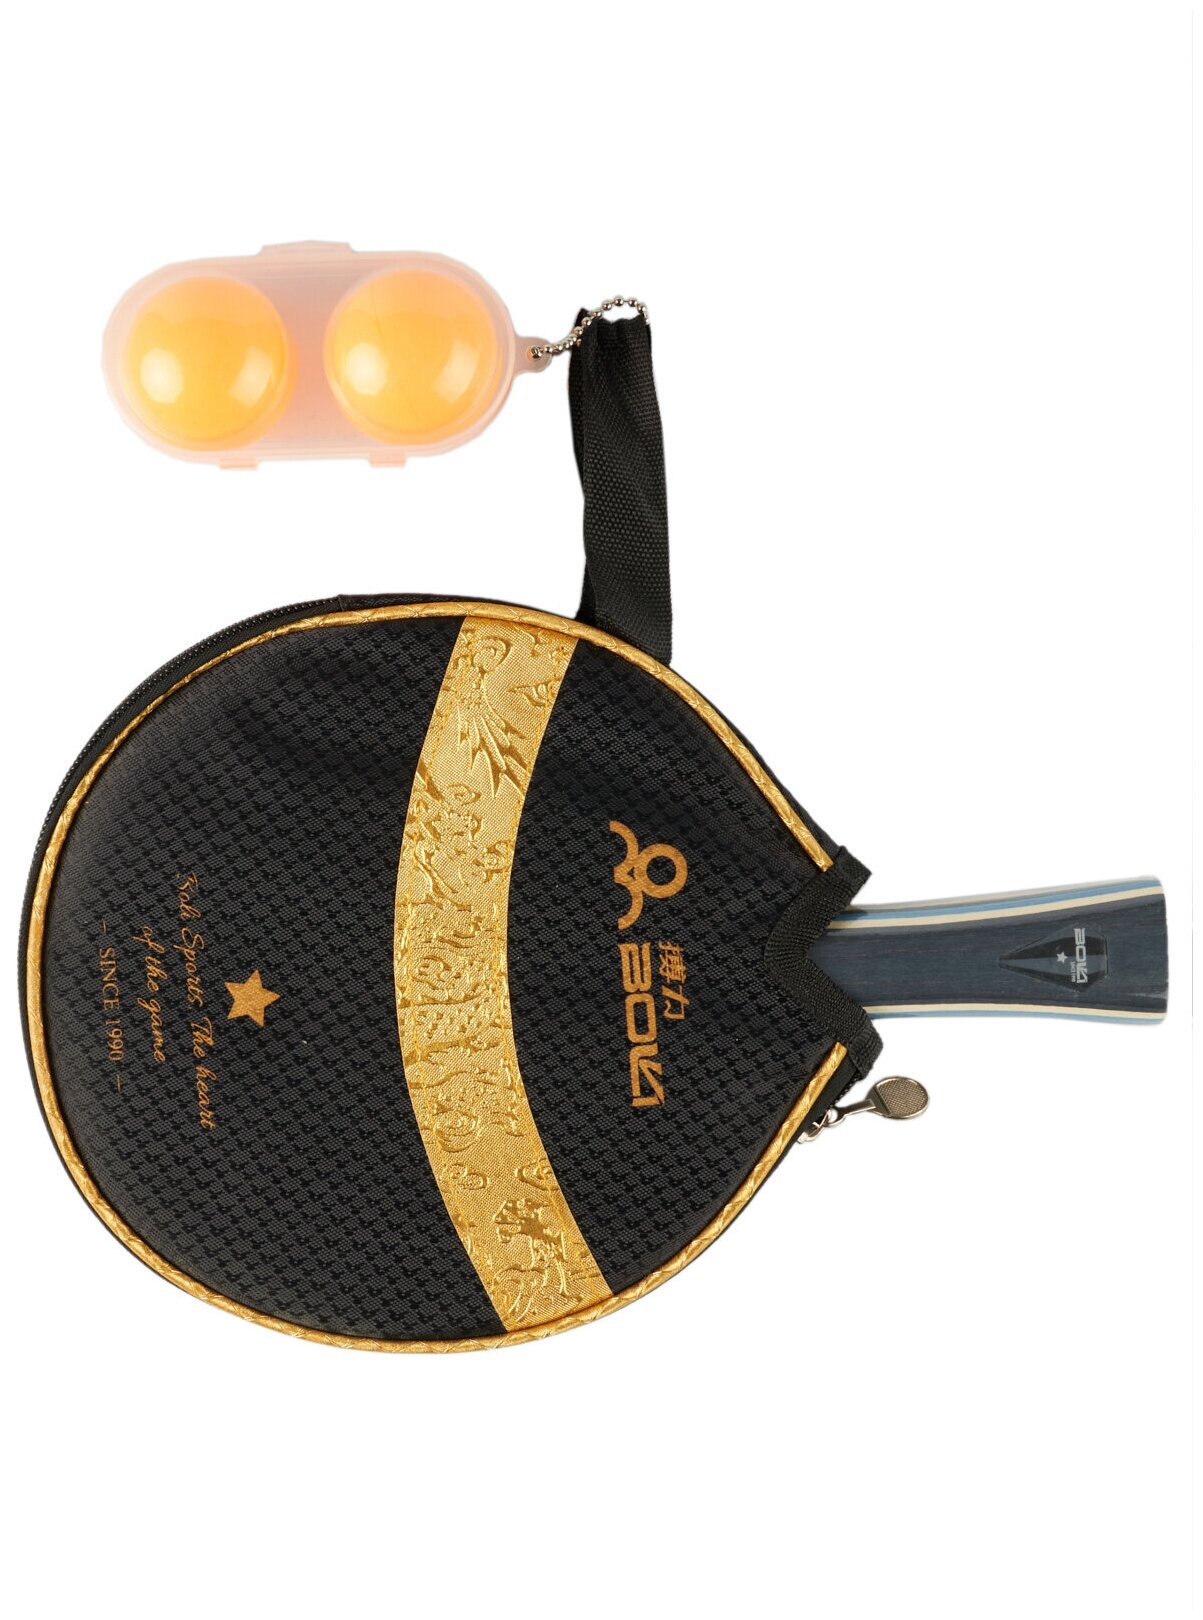 Ракетка для настольного тенниса EXCITE BOLI 1 звезда чехол два мяча в комплекте